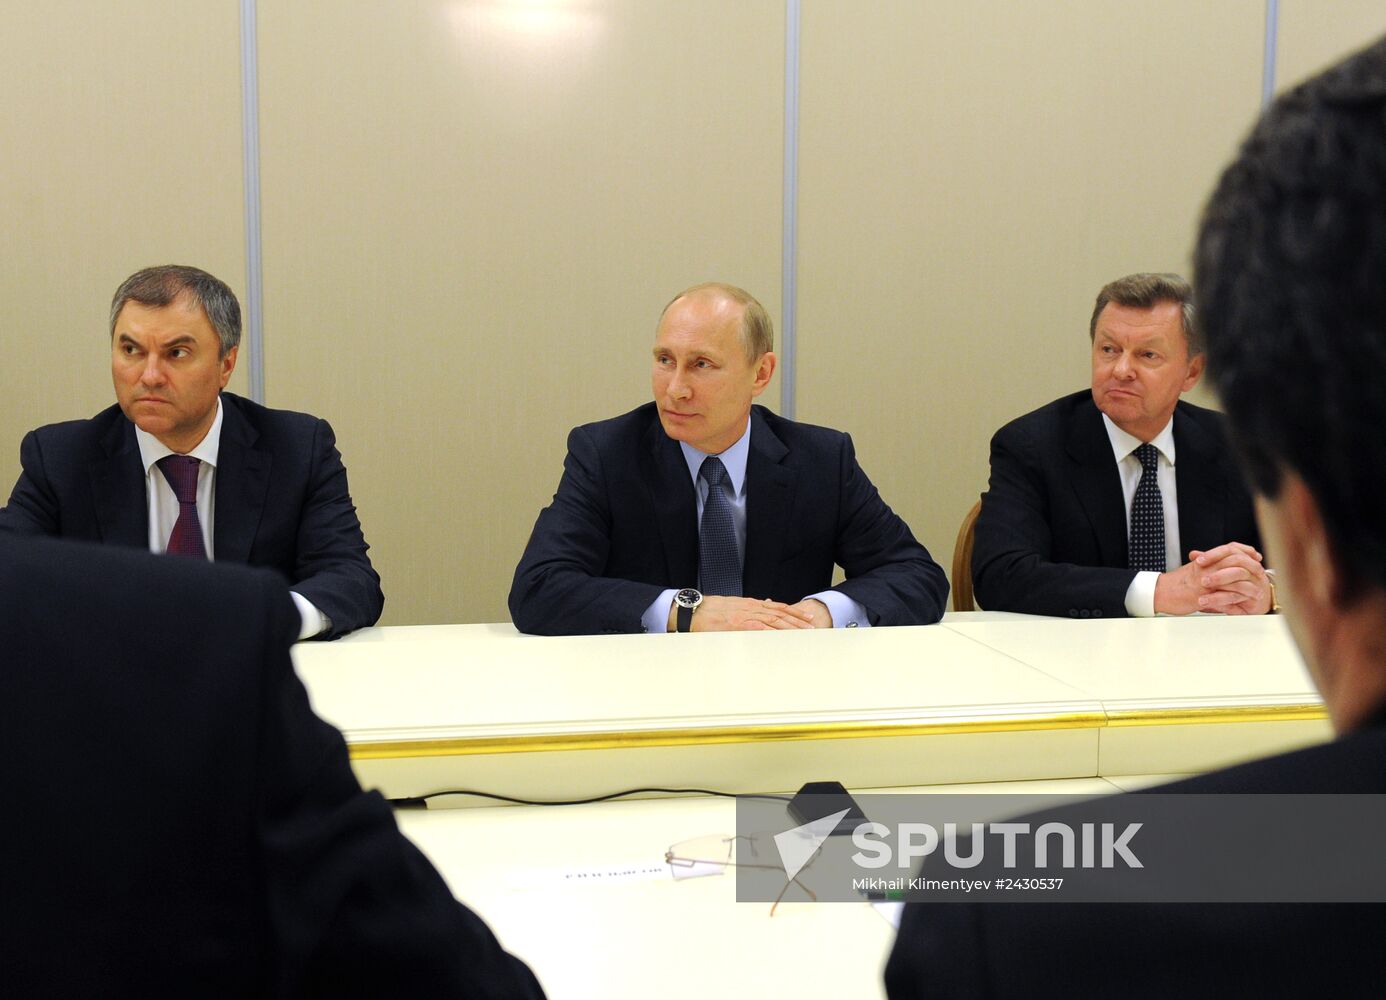 Vladimir Putin meets with Crimean Tatars